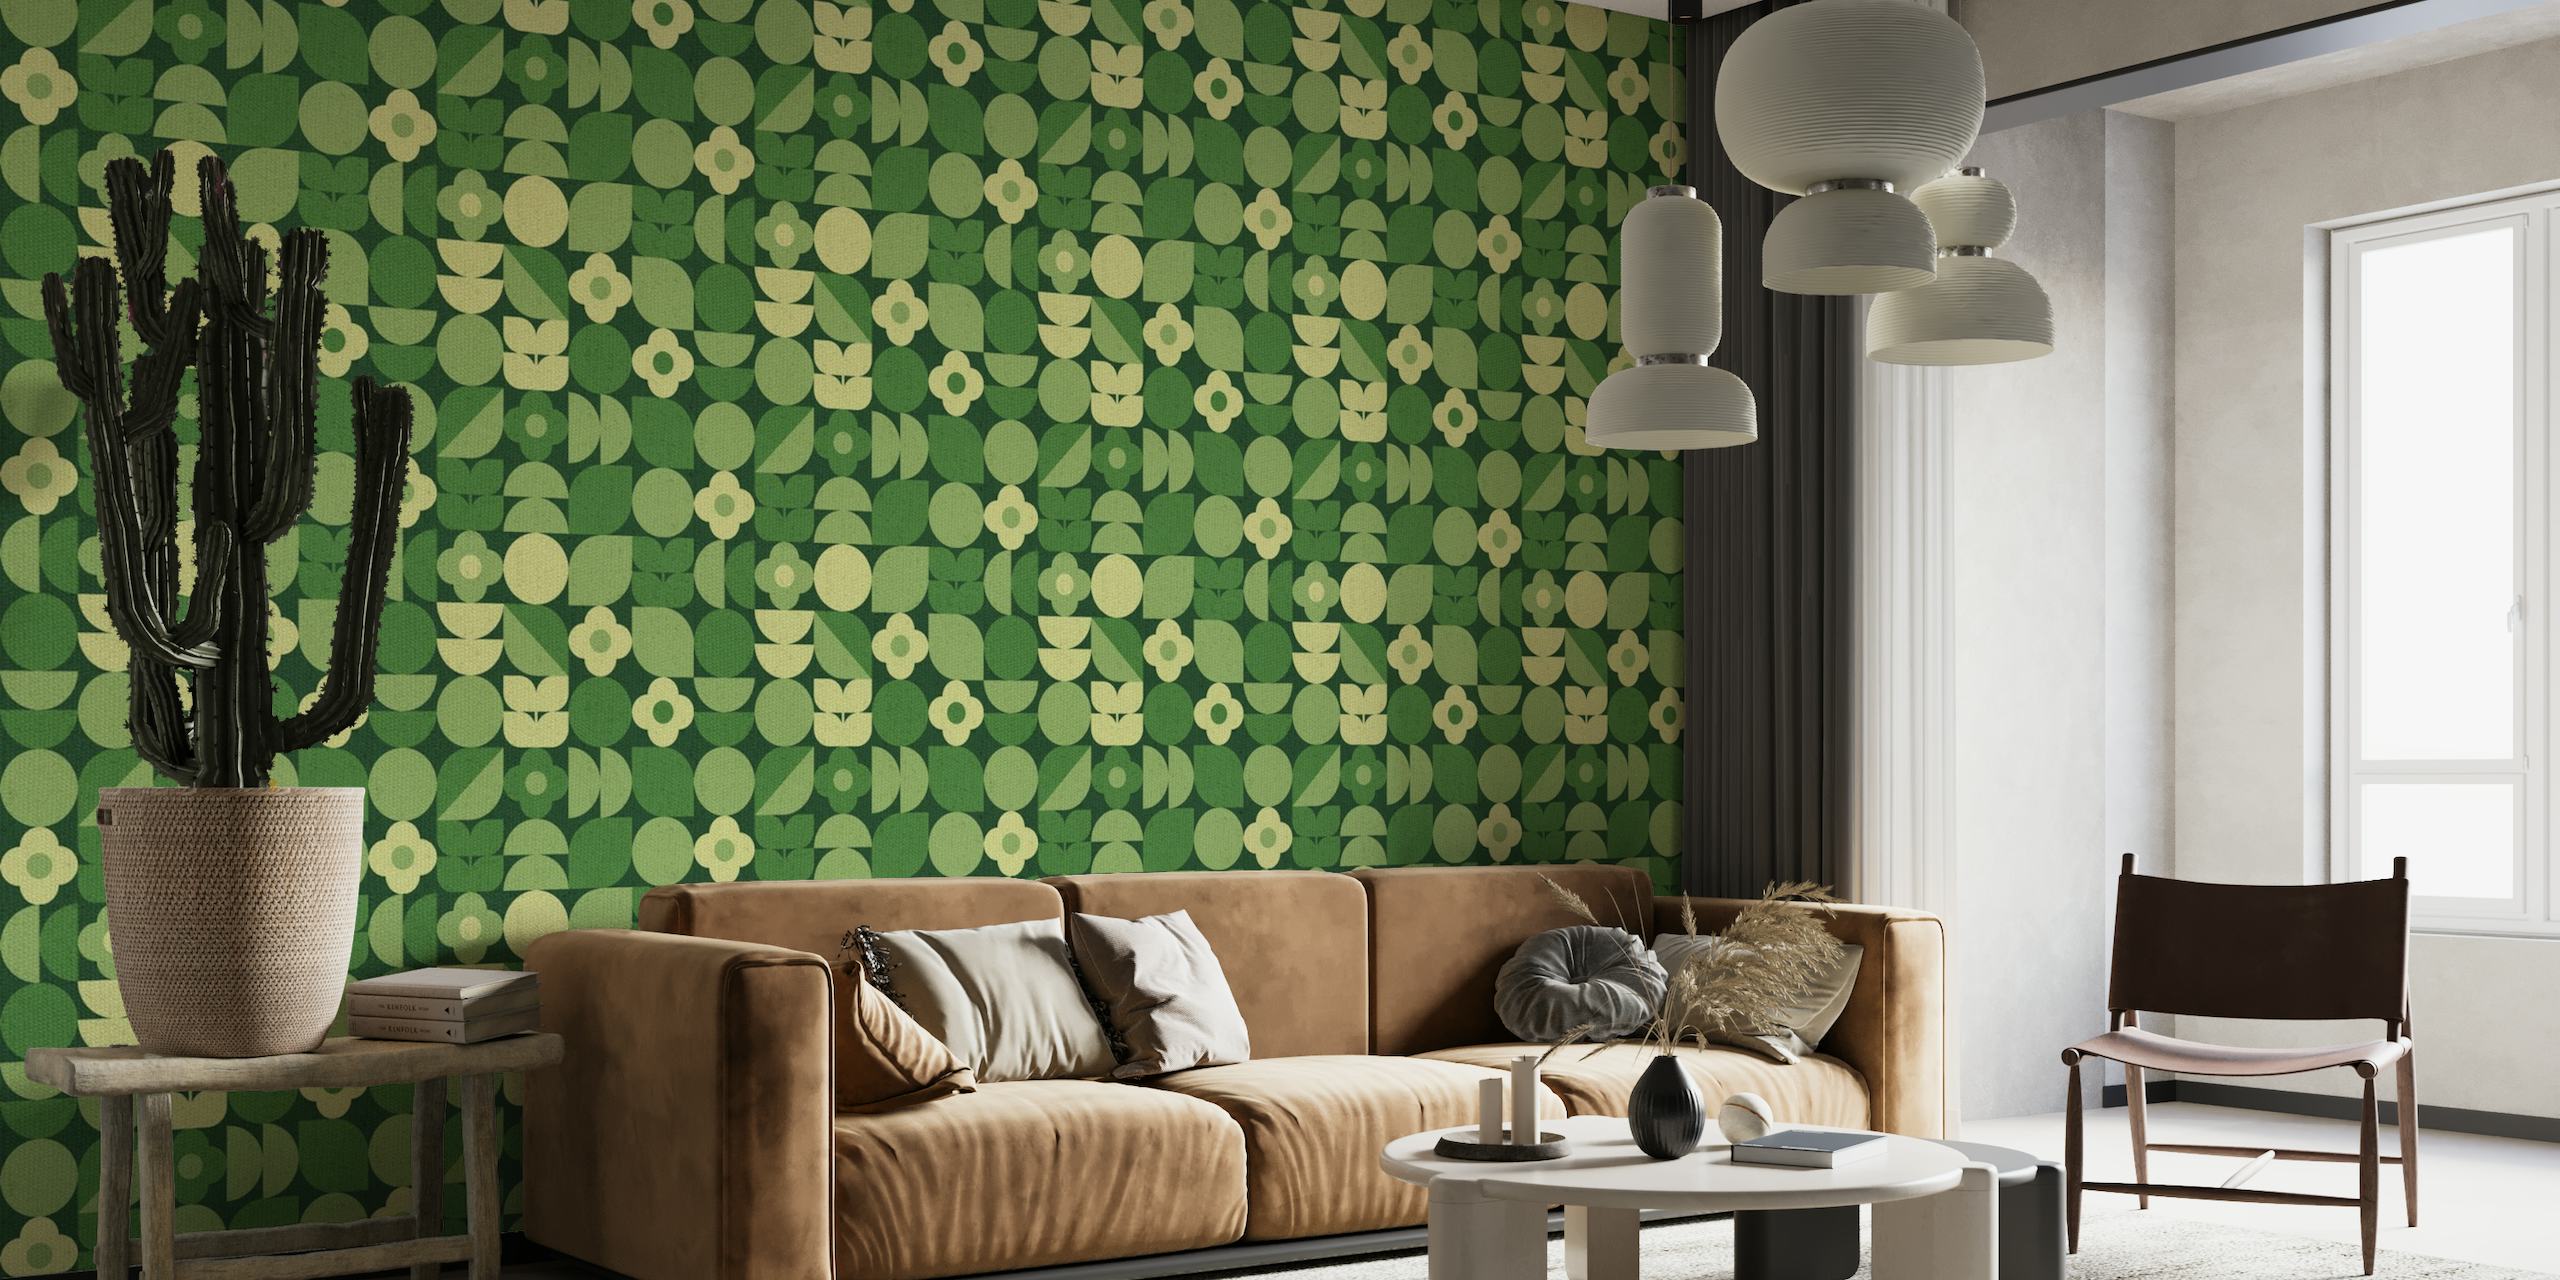 Geo Bauhaus Green Floral Shapes wallpaper